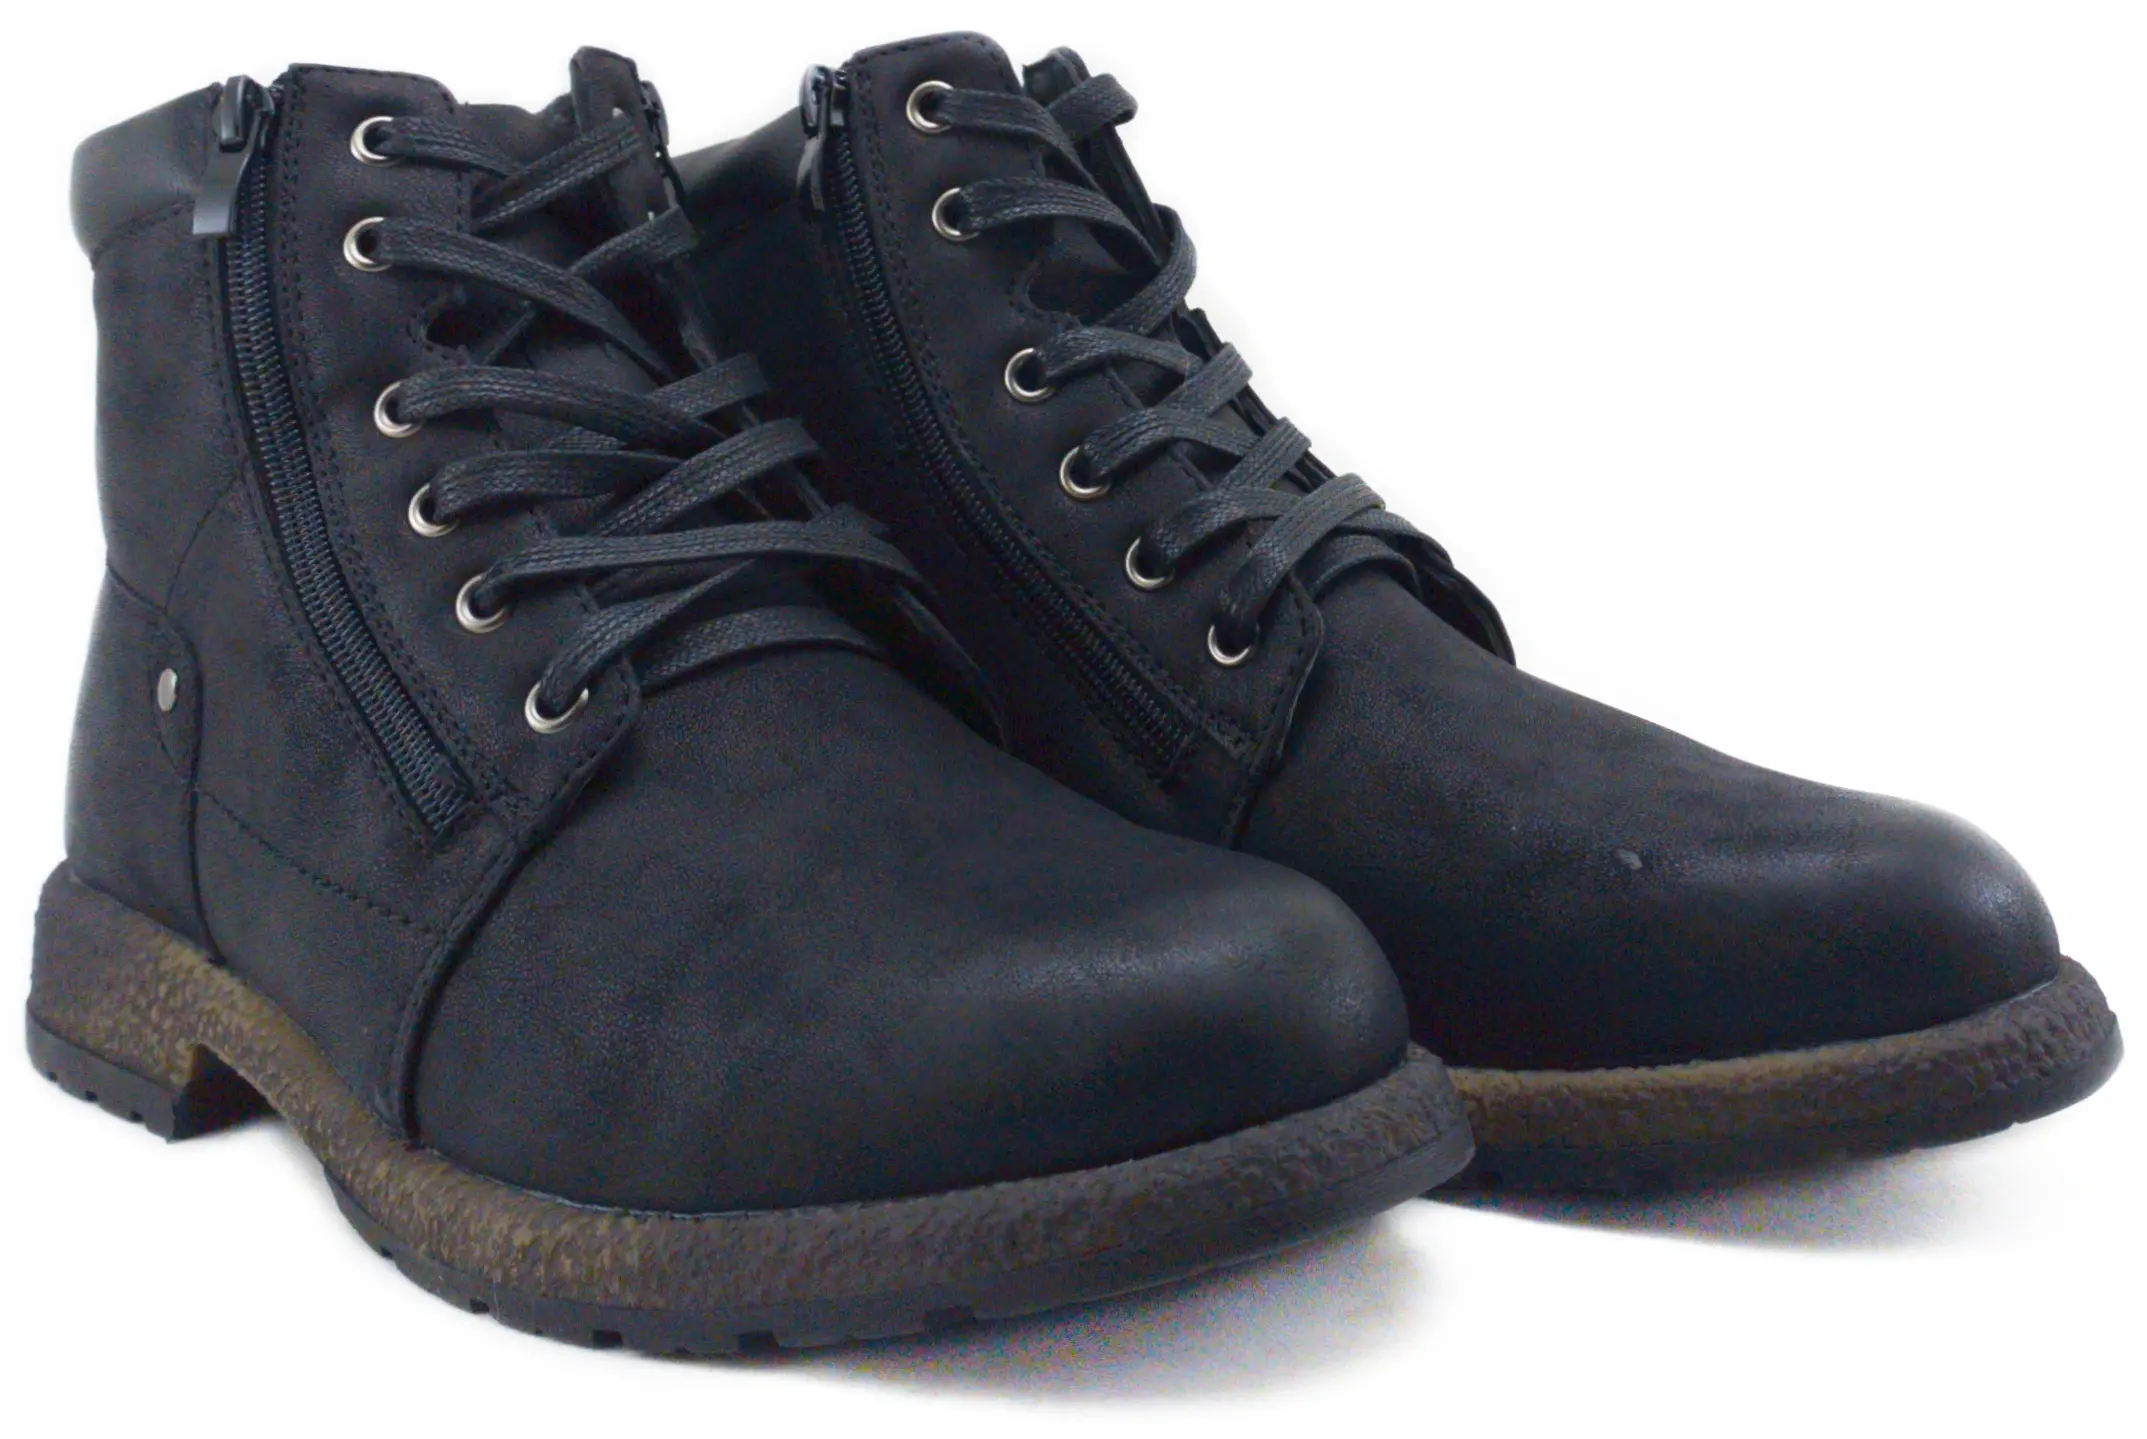 Ботинки подростковые "Tessoro" 178668-01-01 (38-41)